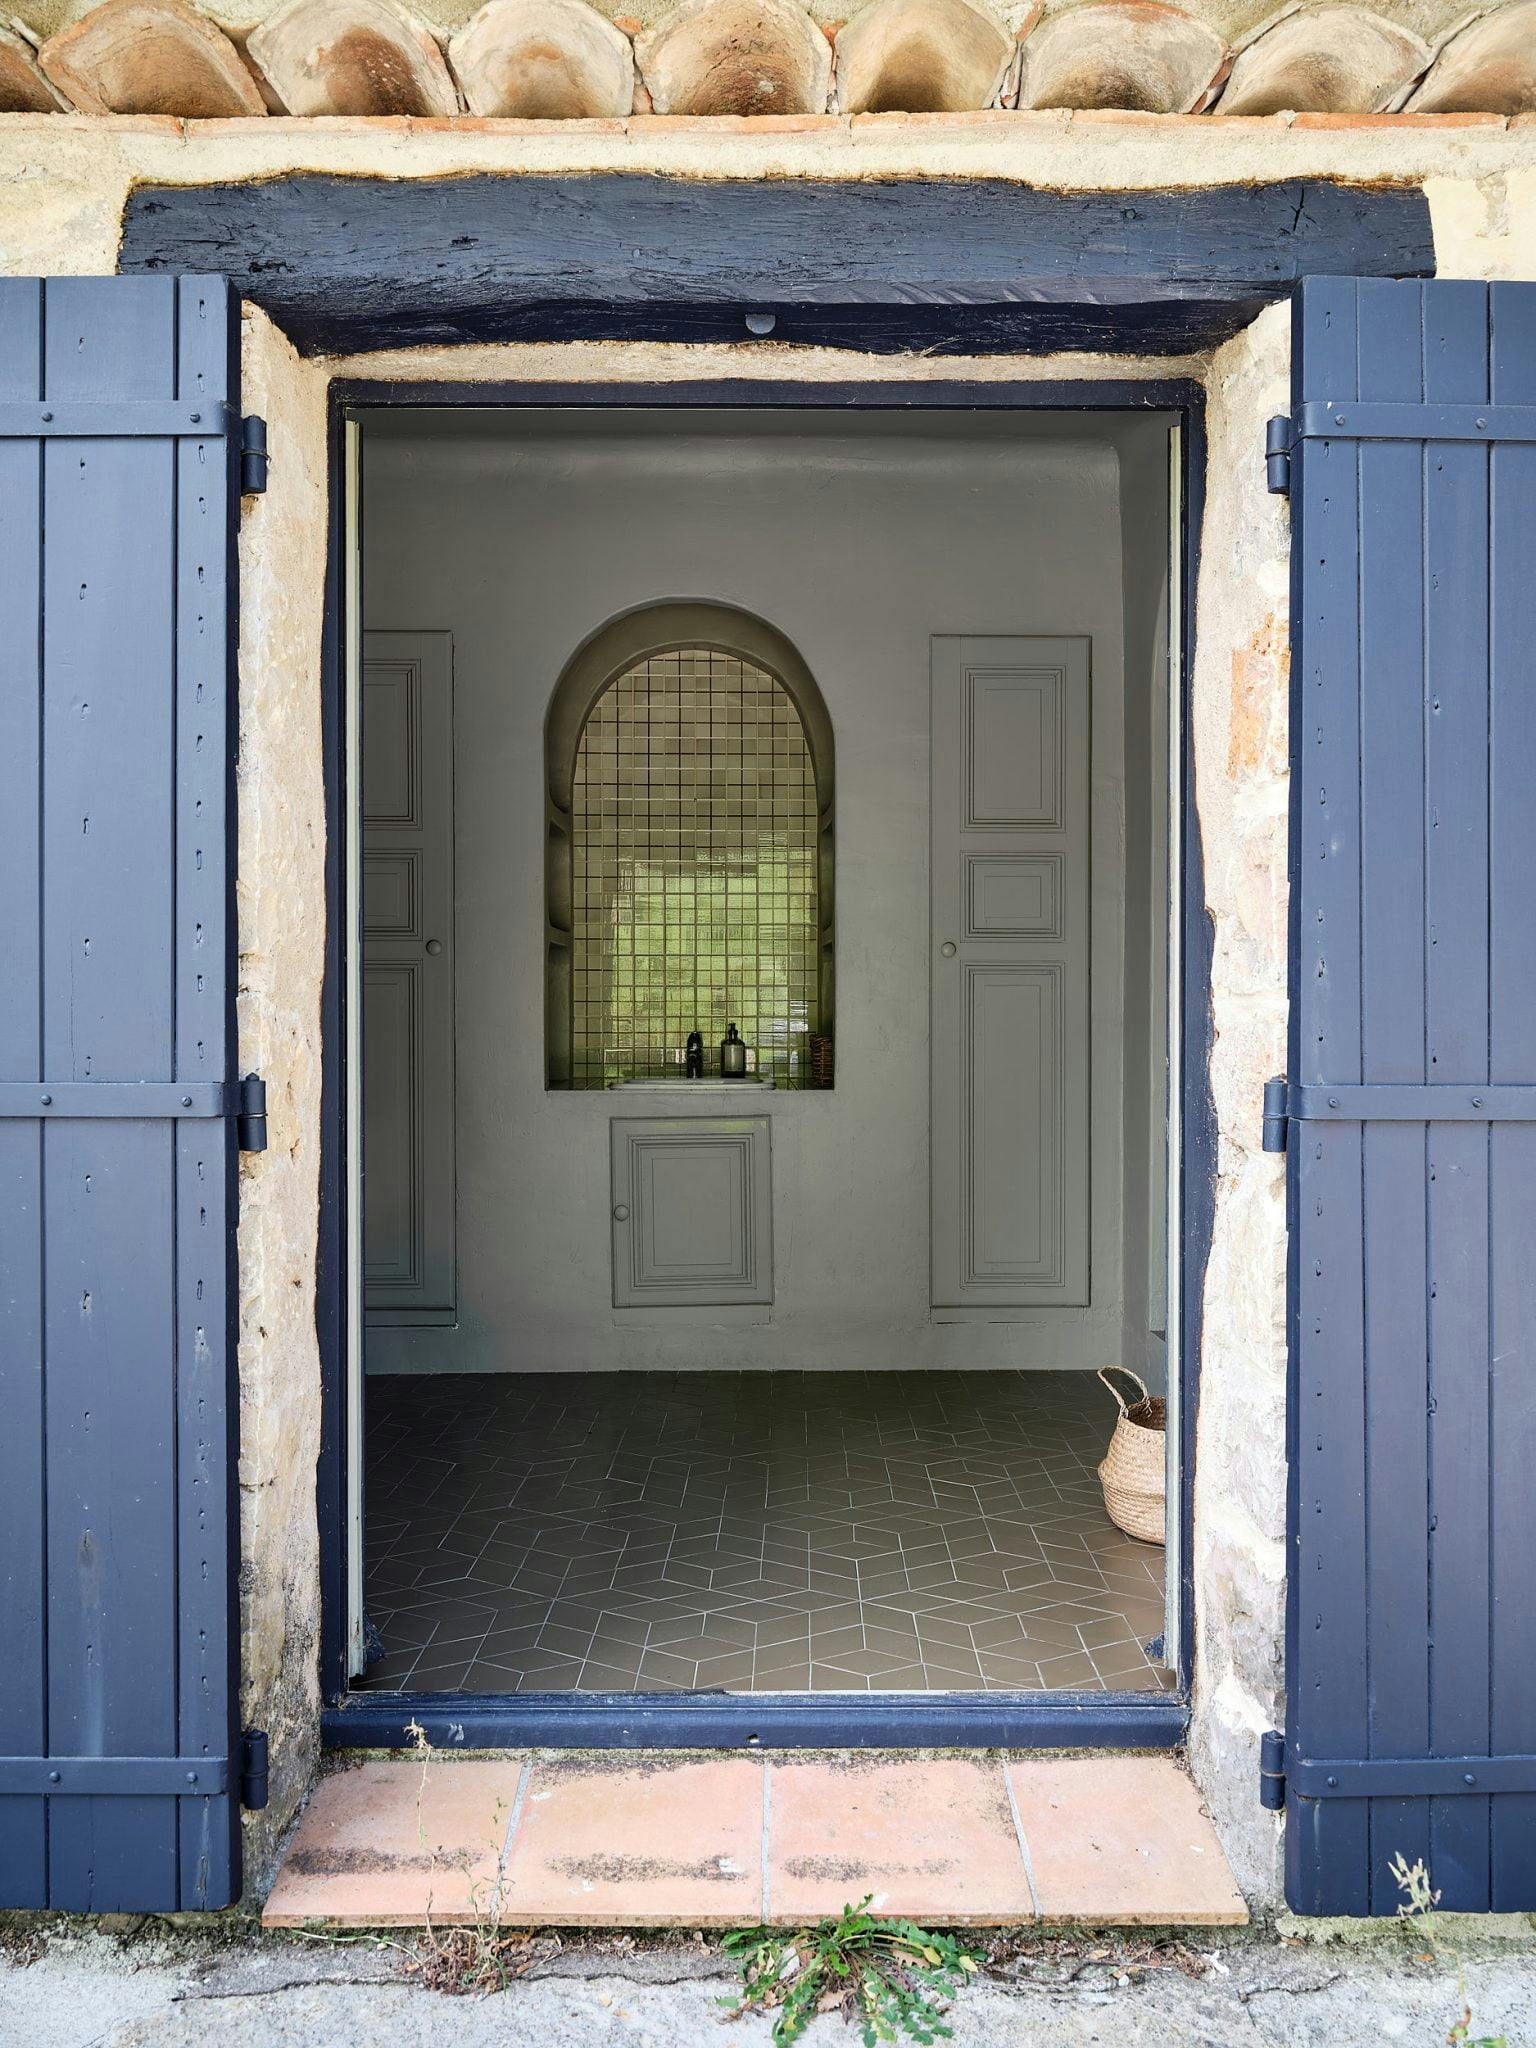 entrance to the pavilion, blue wooden door